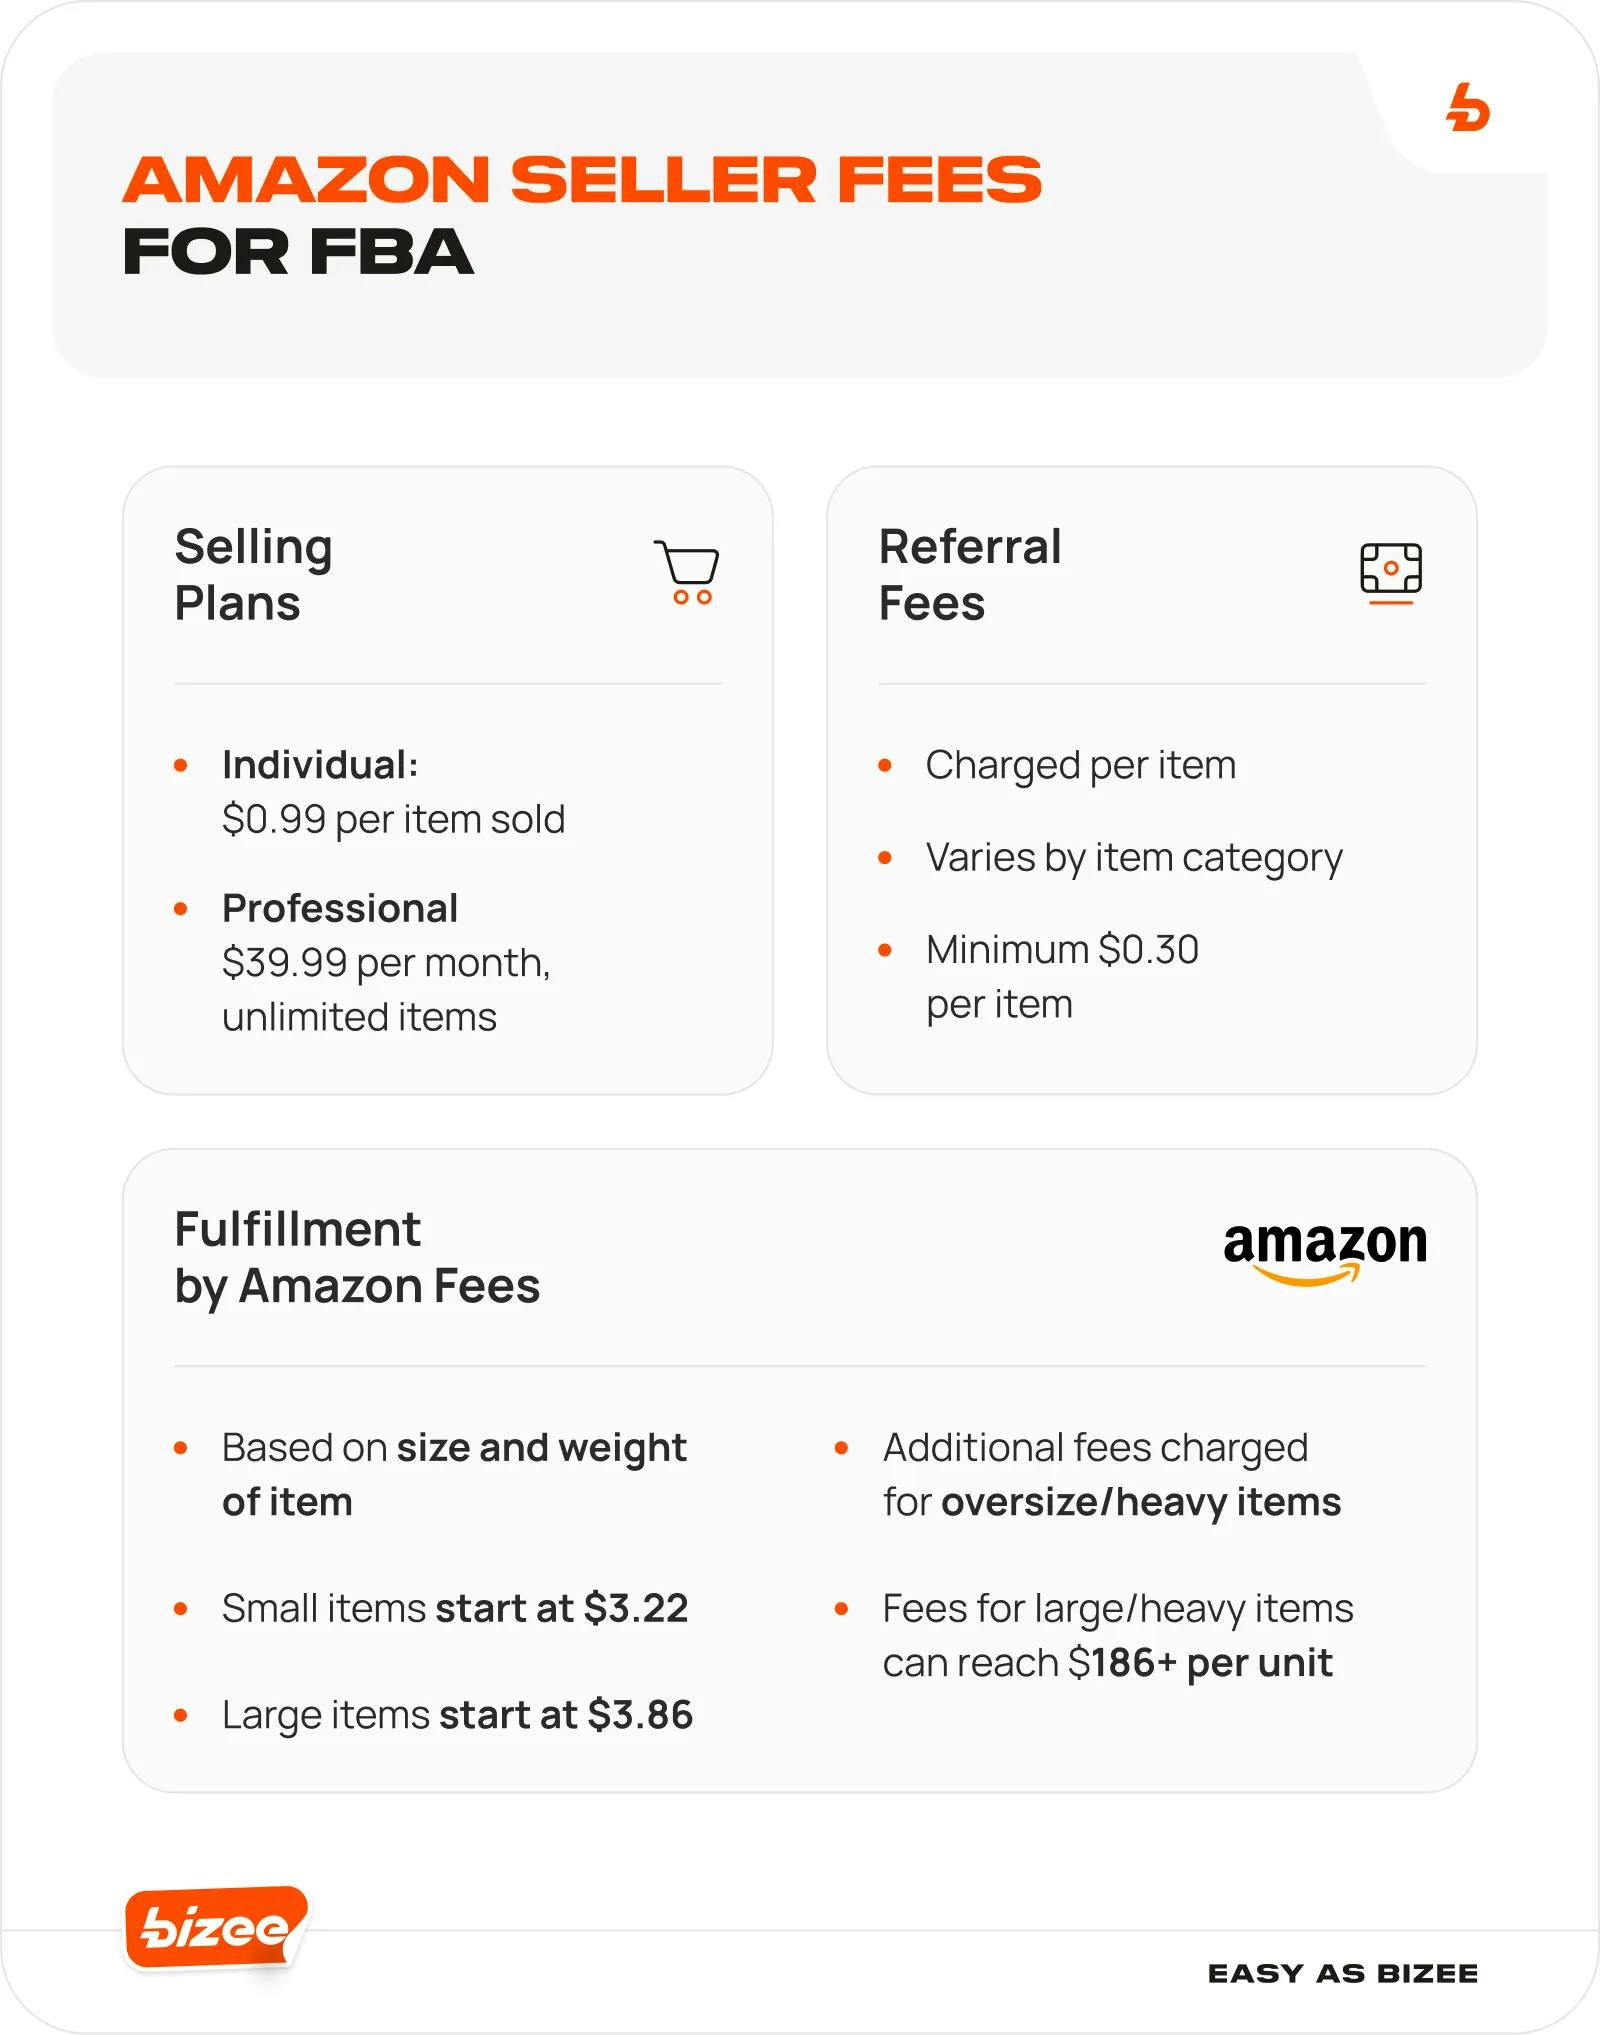 Amazon Seller Fees for FBA